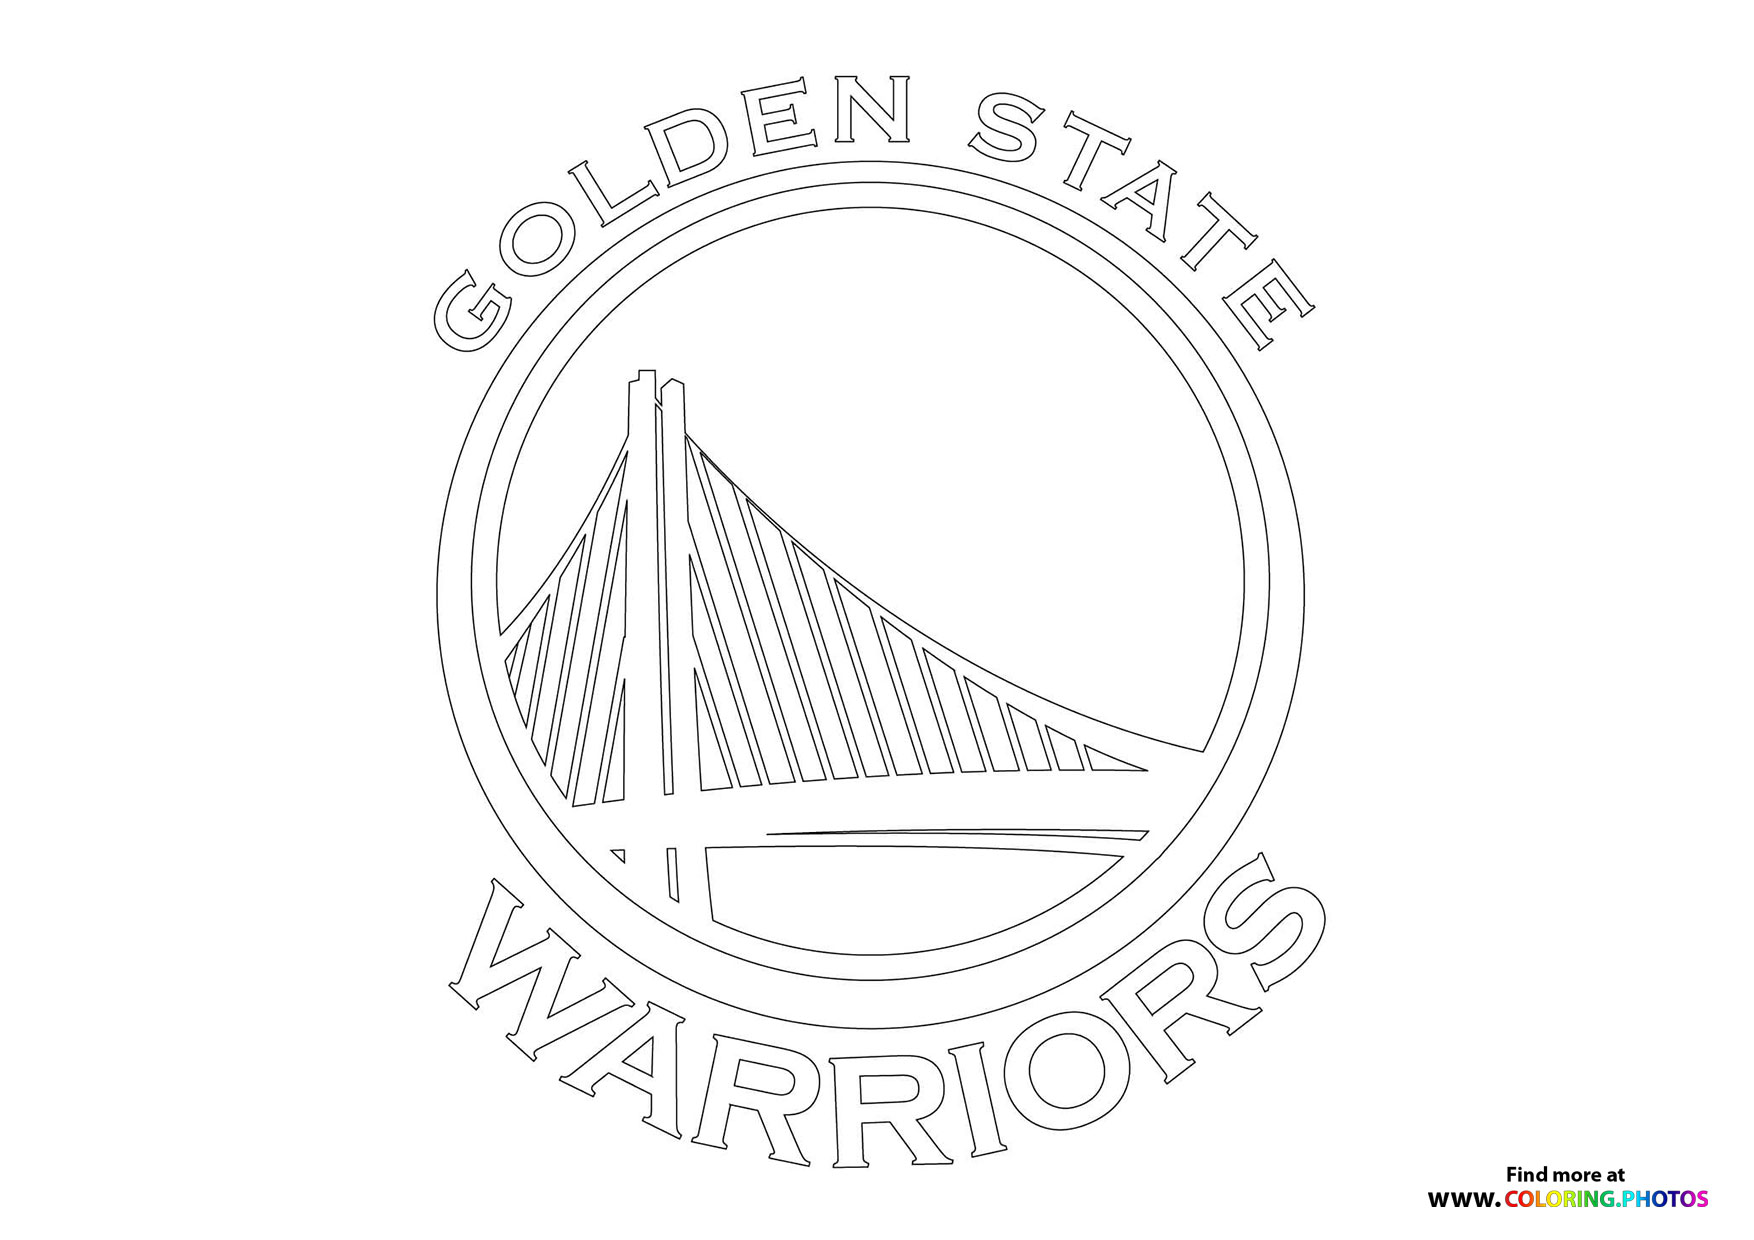 Golden state warriors logo